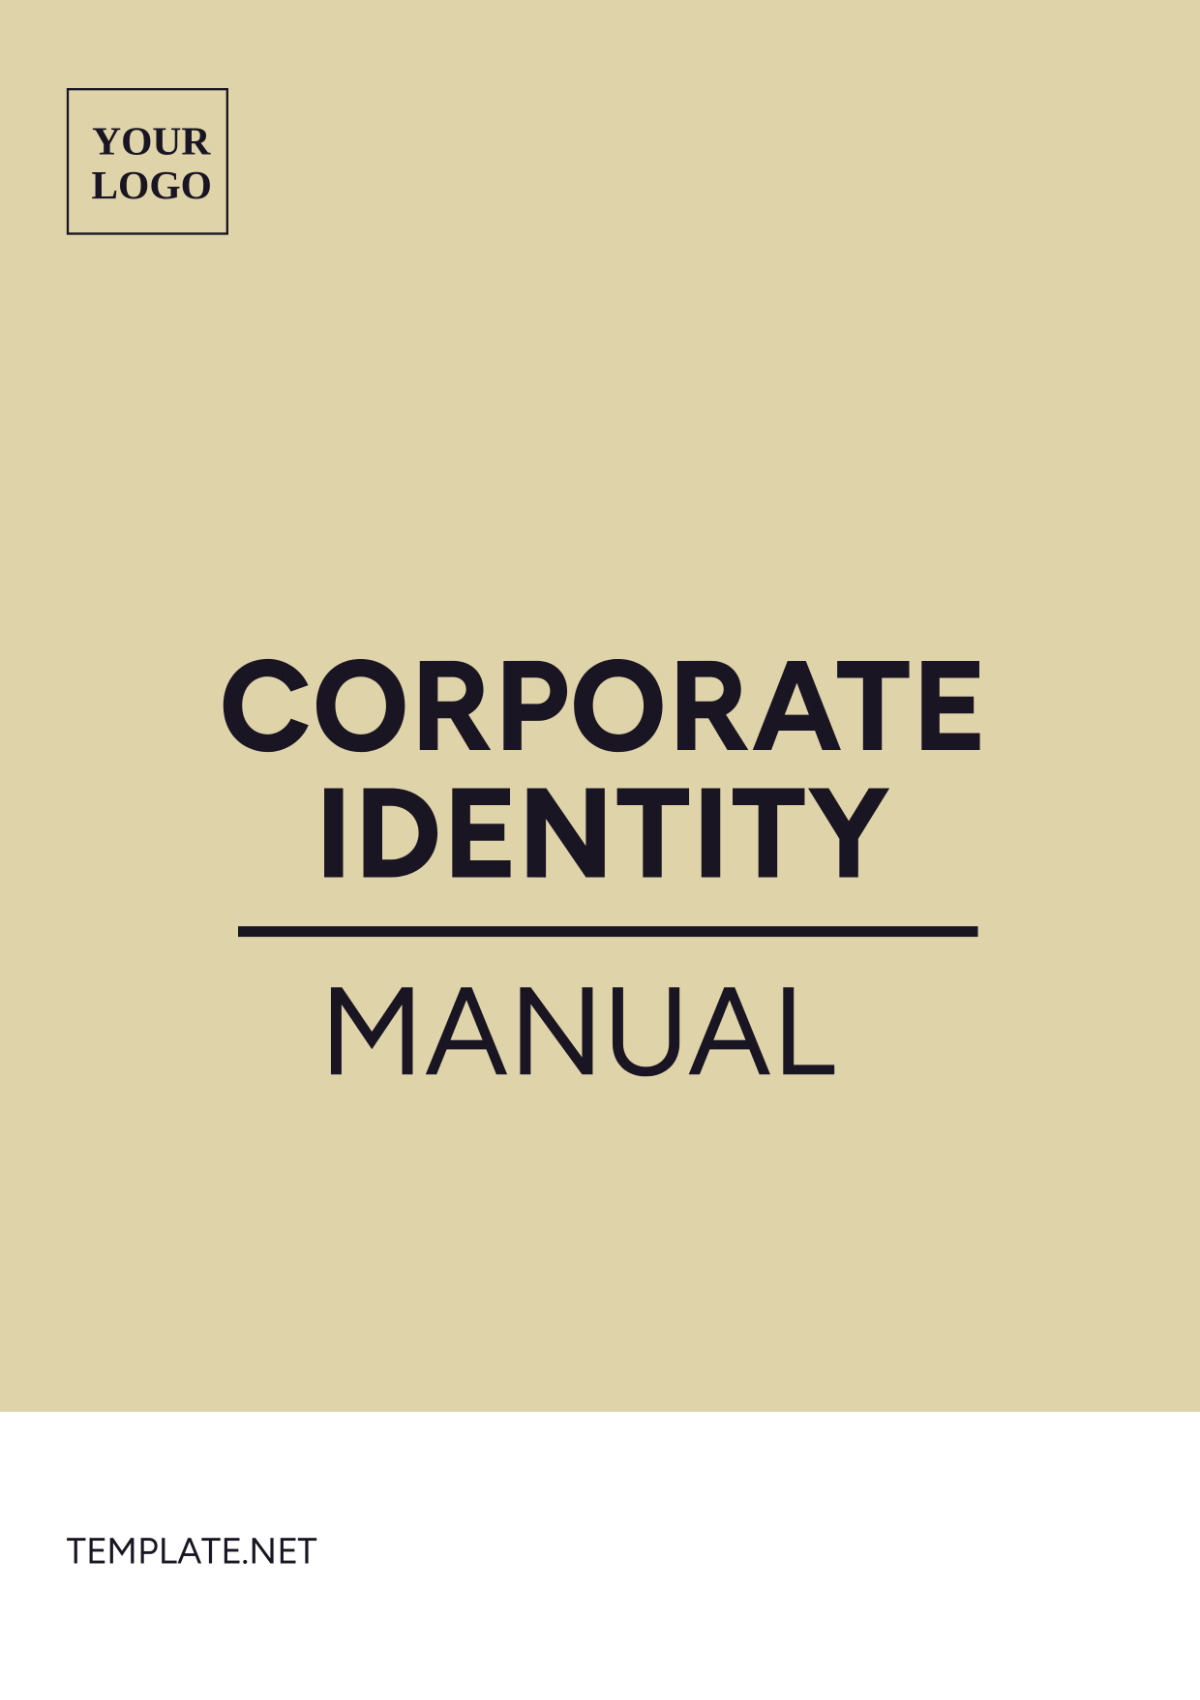 Corporate Identity Manual Template